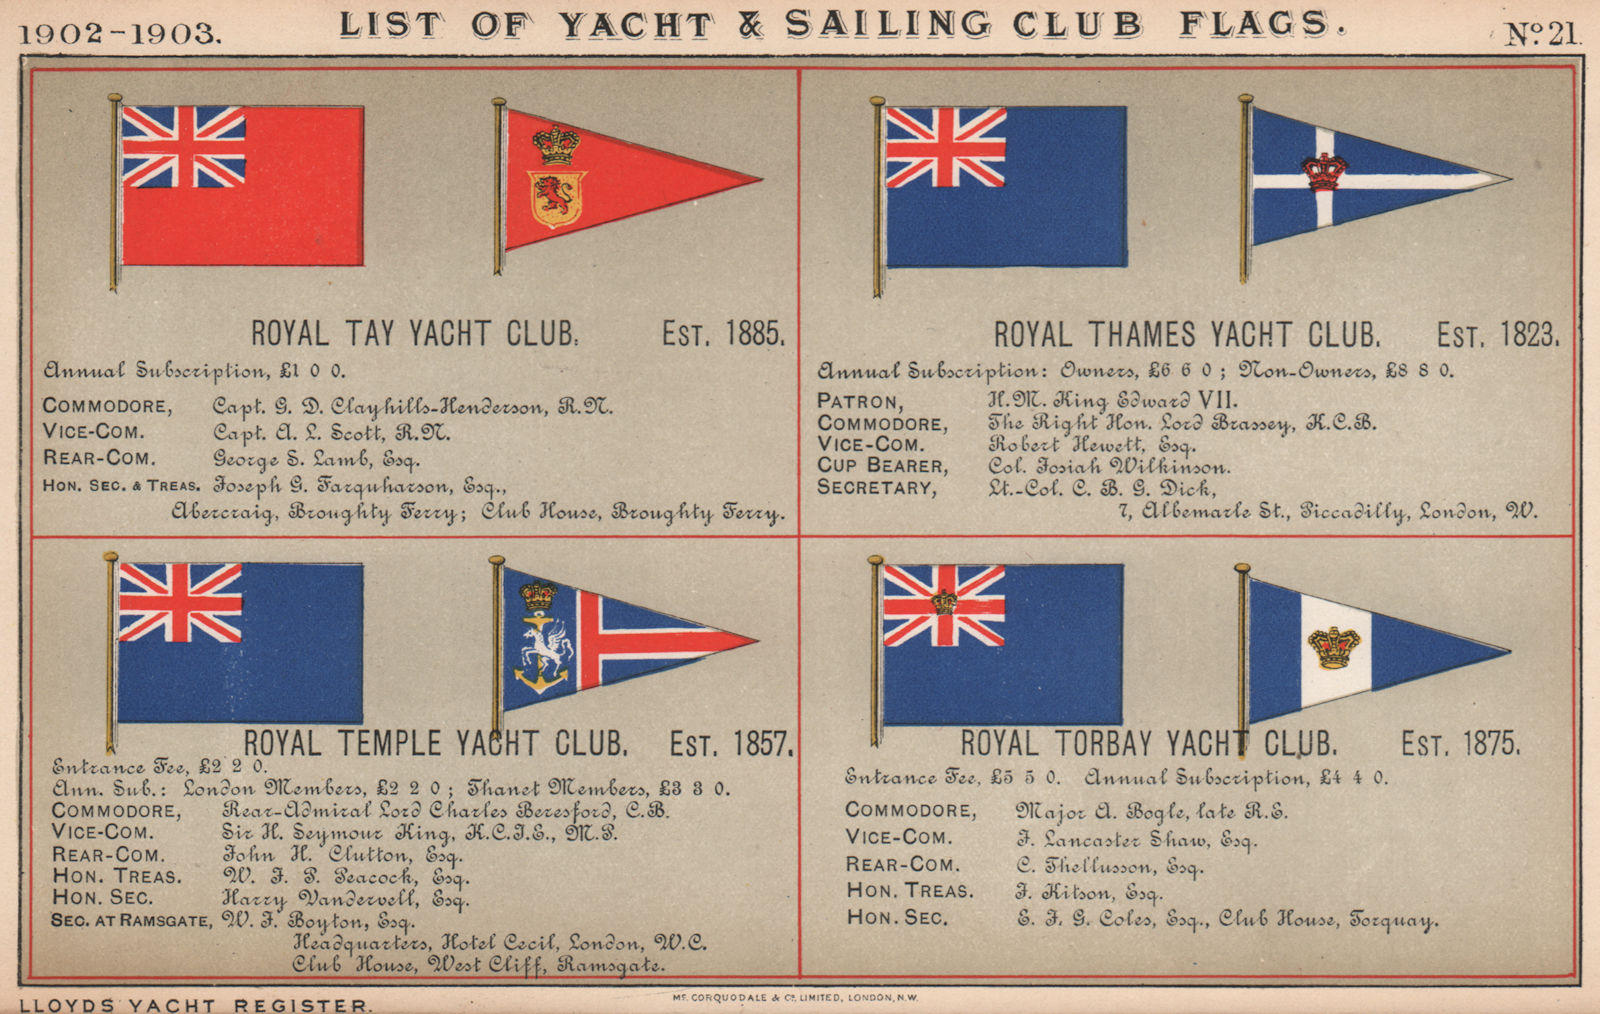 ROYAL YACHT & SAILING CLUB FLAGS. Tay. Thames. Temple. Torbay 1902 old print